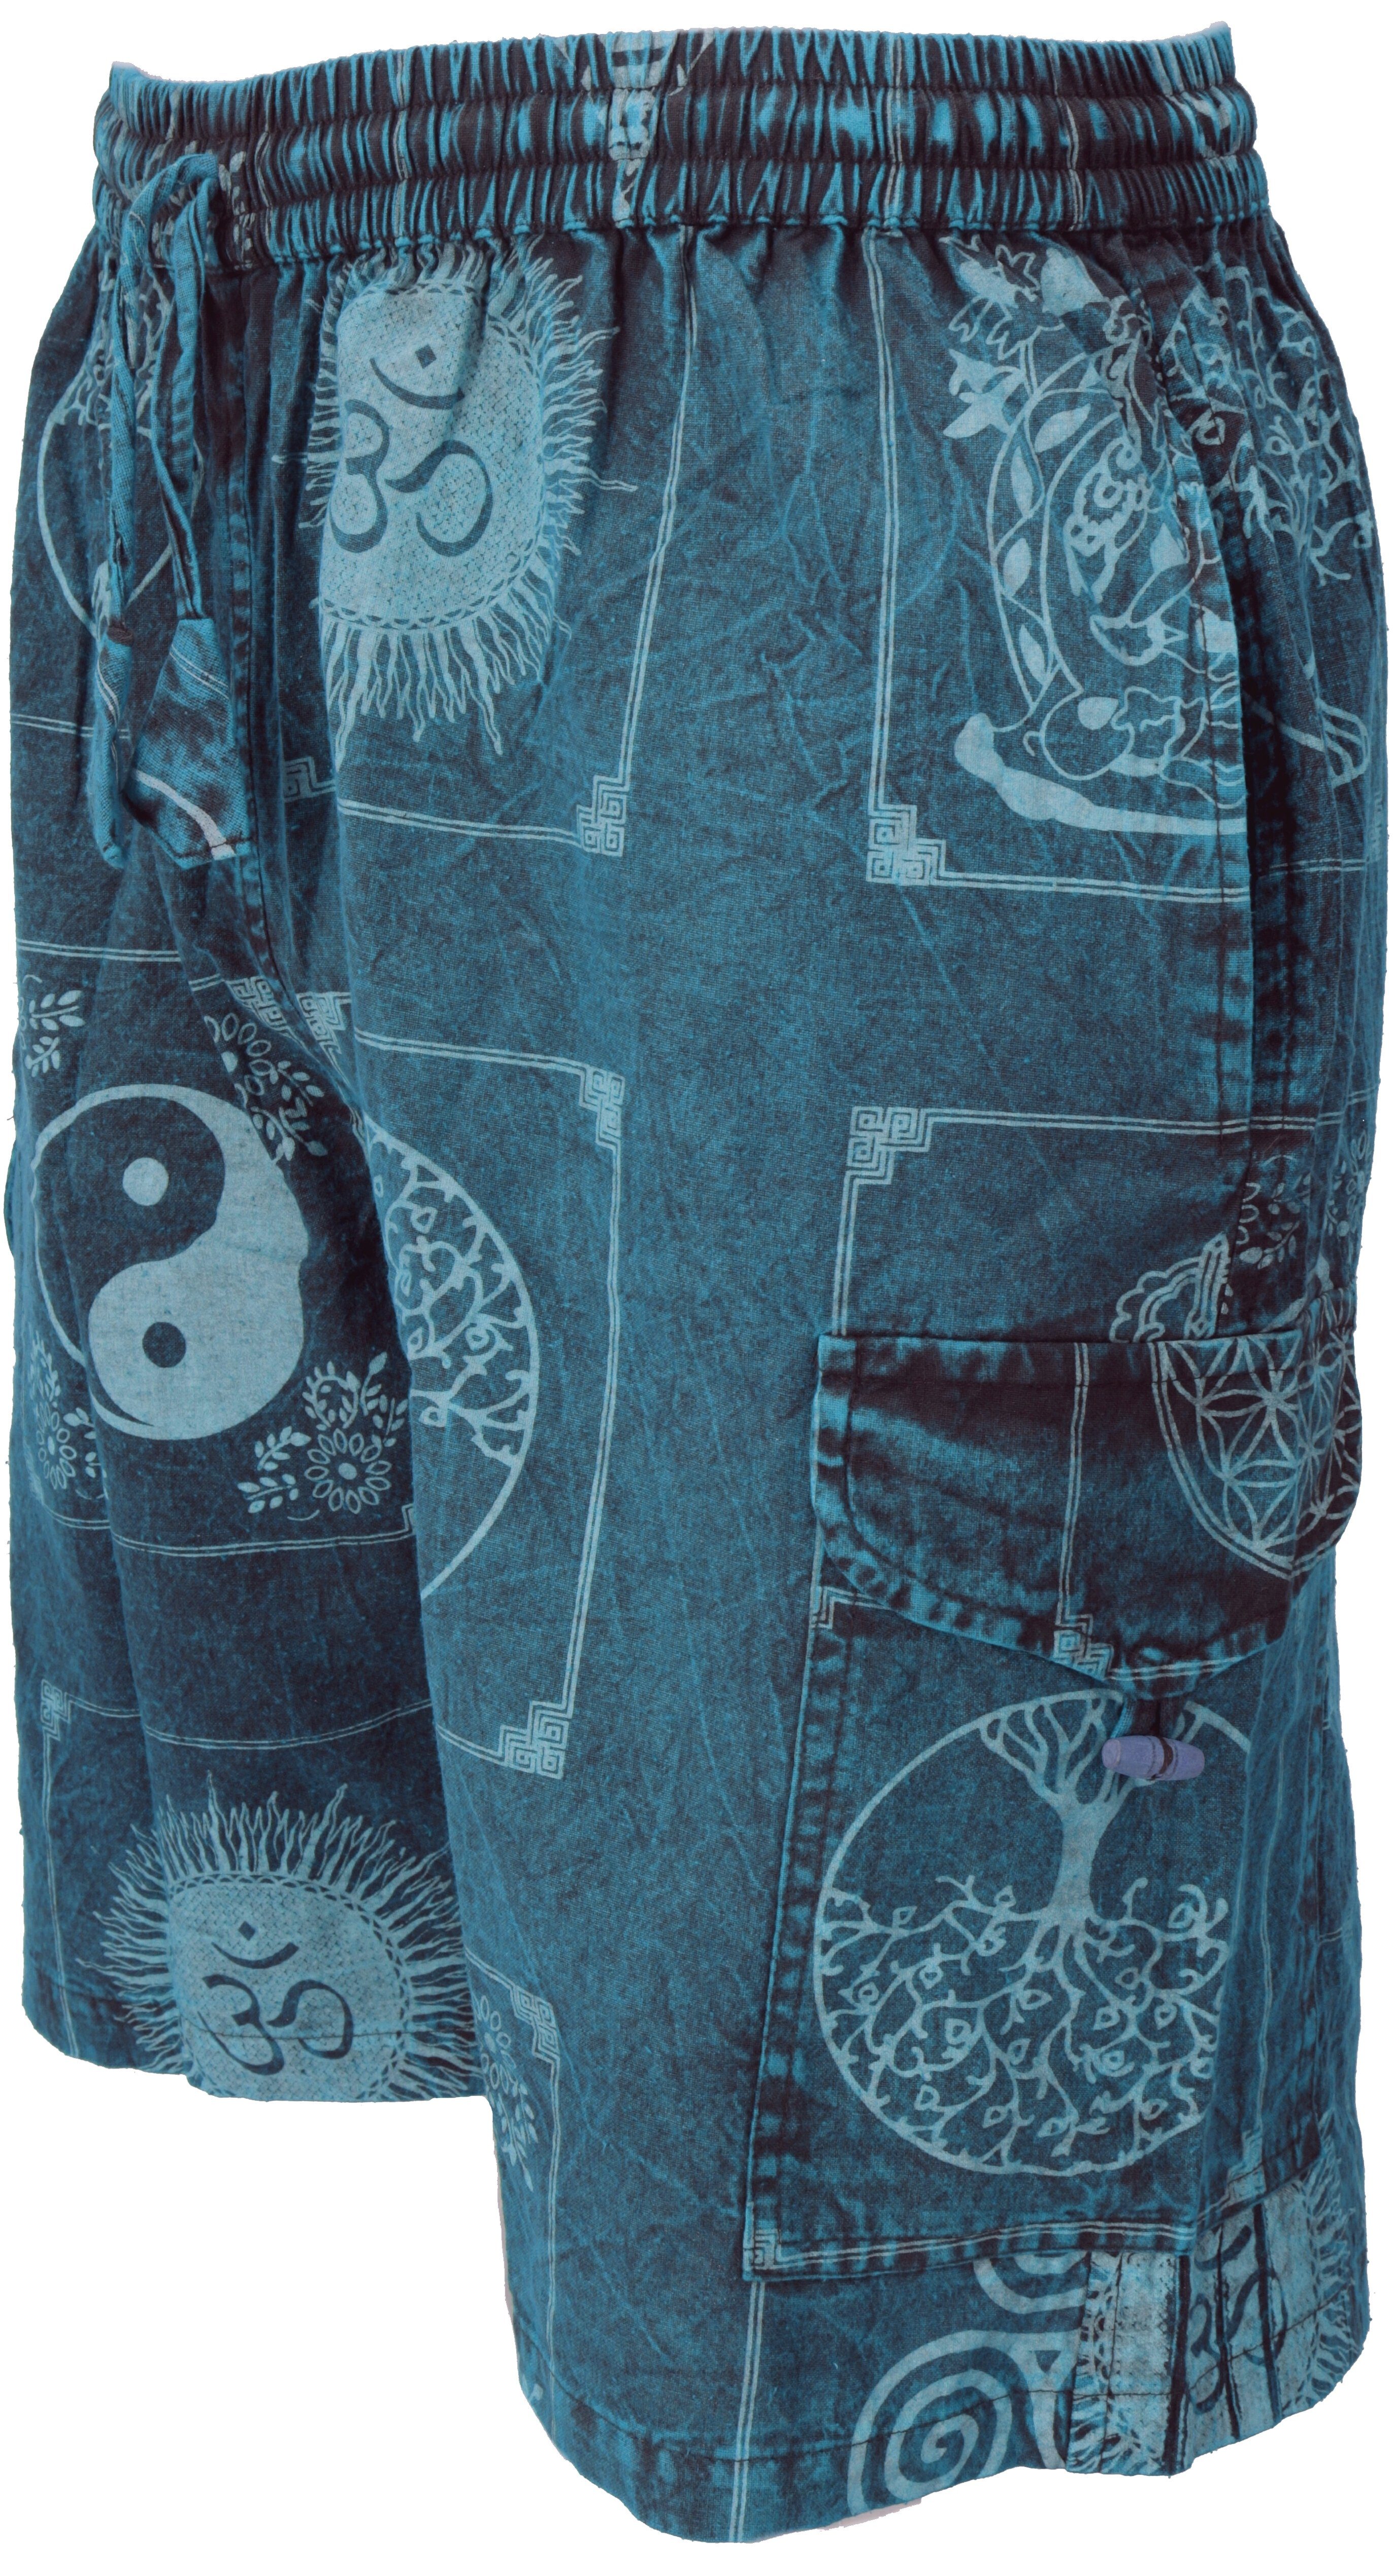 stonewash Nepal aus Yogashorts, Shorts Hippie, Ethno Relaxhose Bekleidung Style, alternative blau Guru-Shop Ethno -..